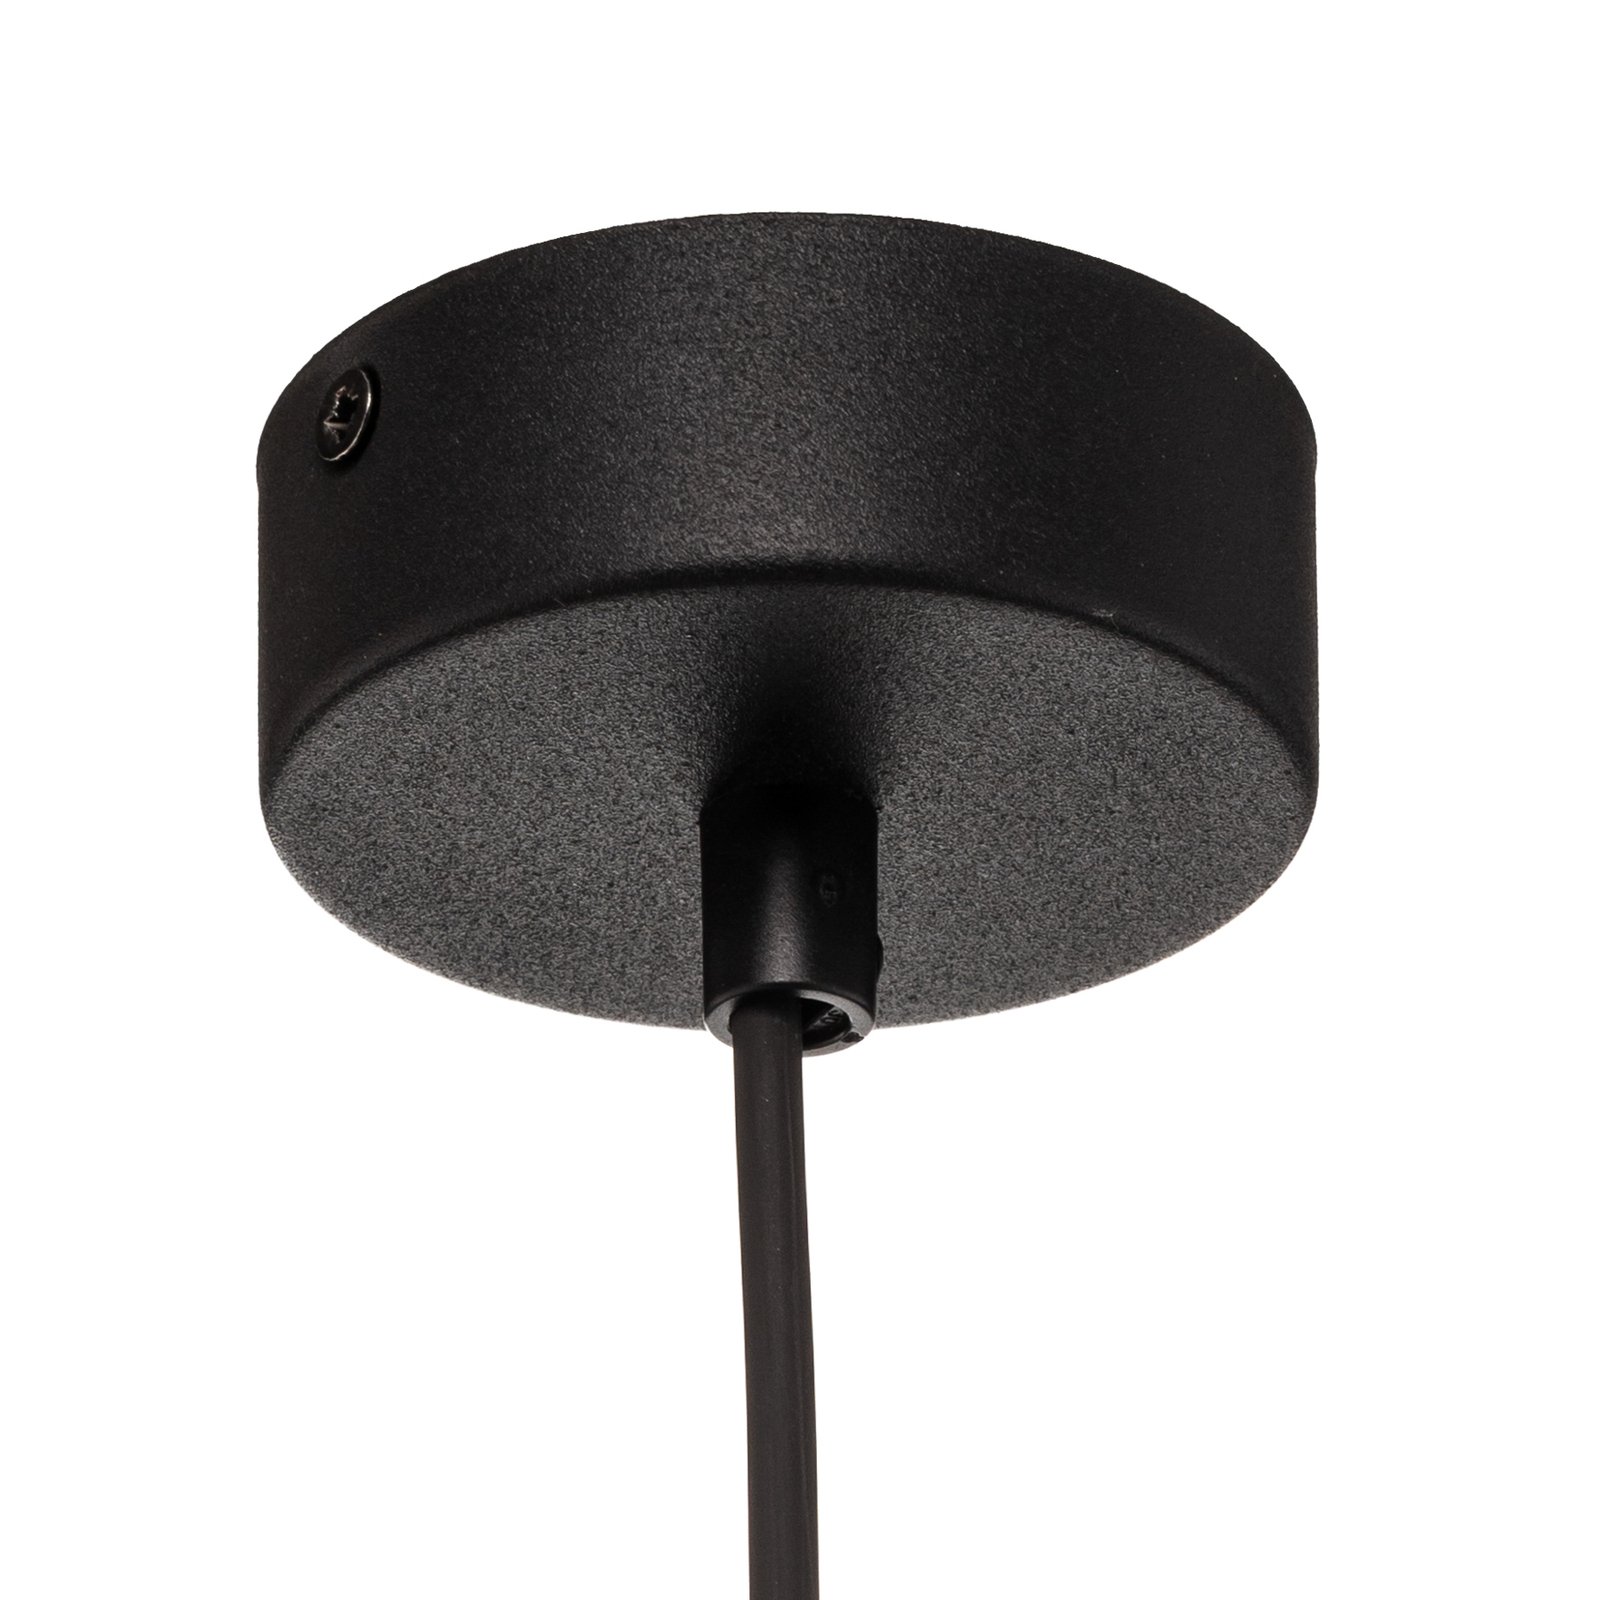 Maxi hanglamp met glazen kap, 1-lamp Ø 25cm